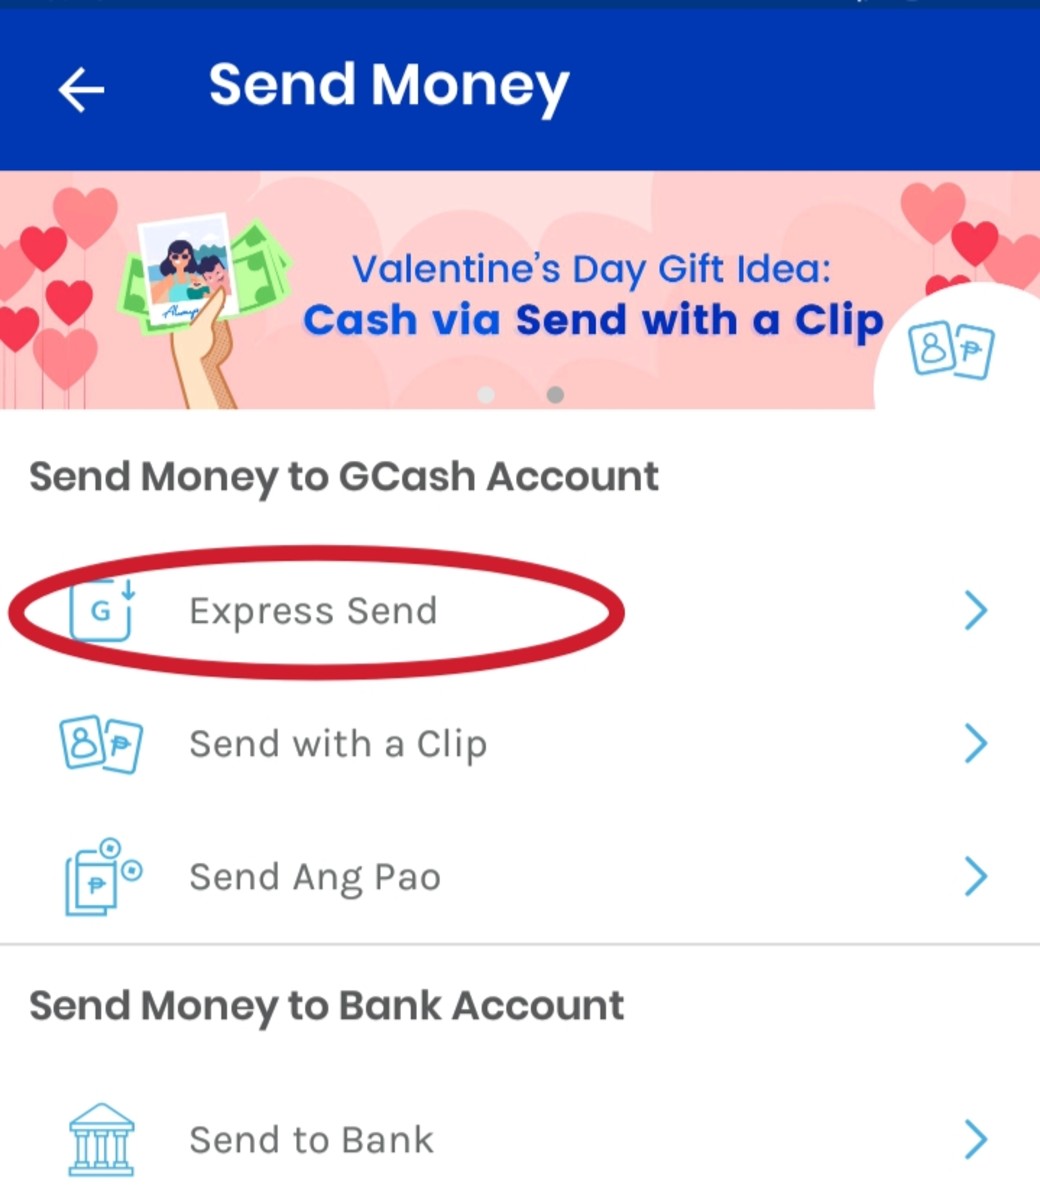 "Send Money" options